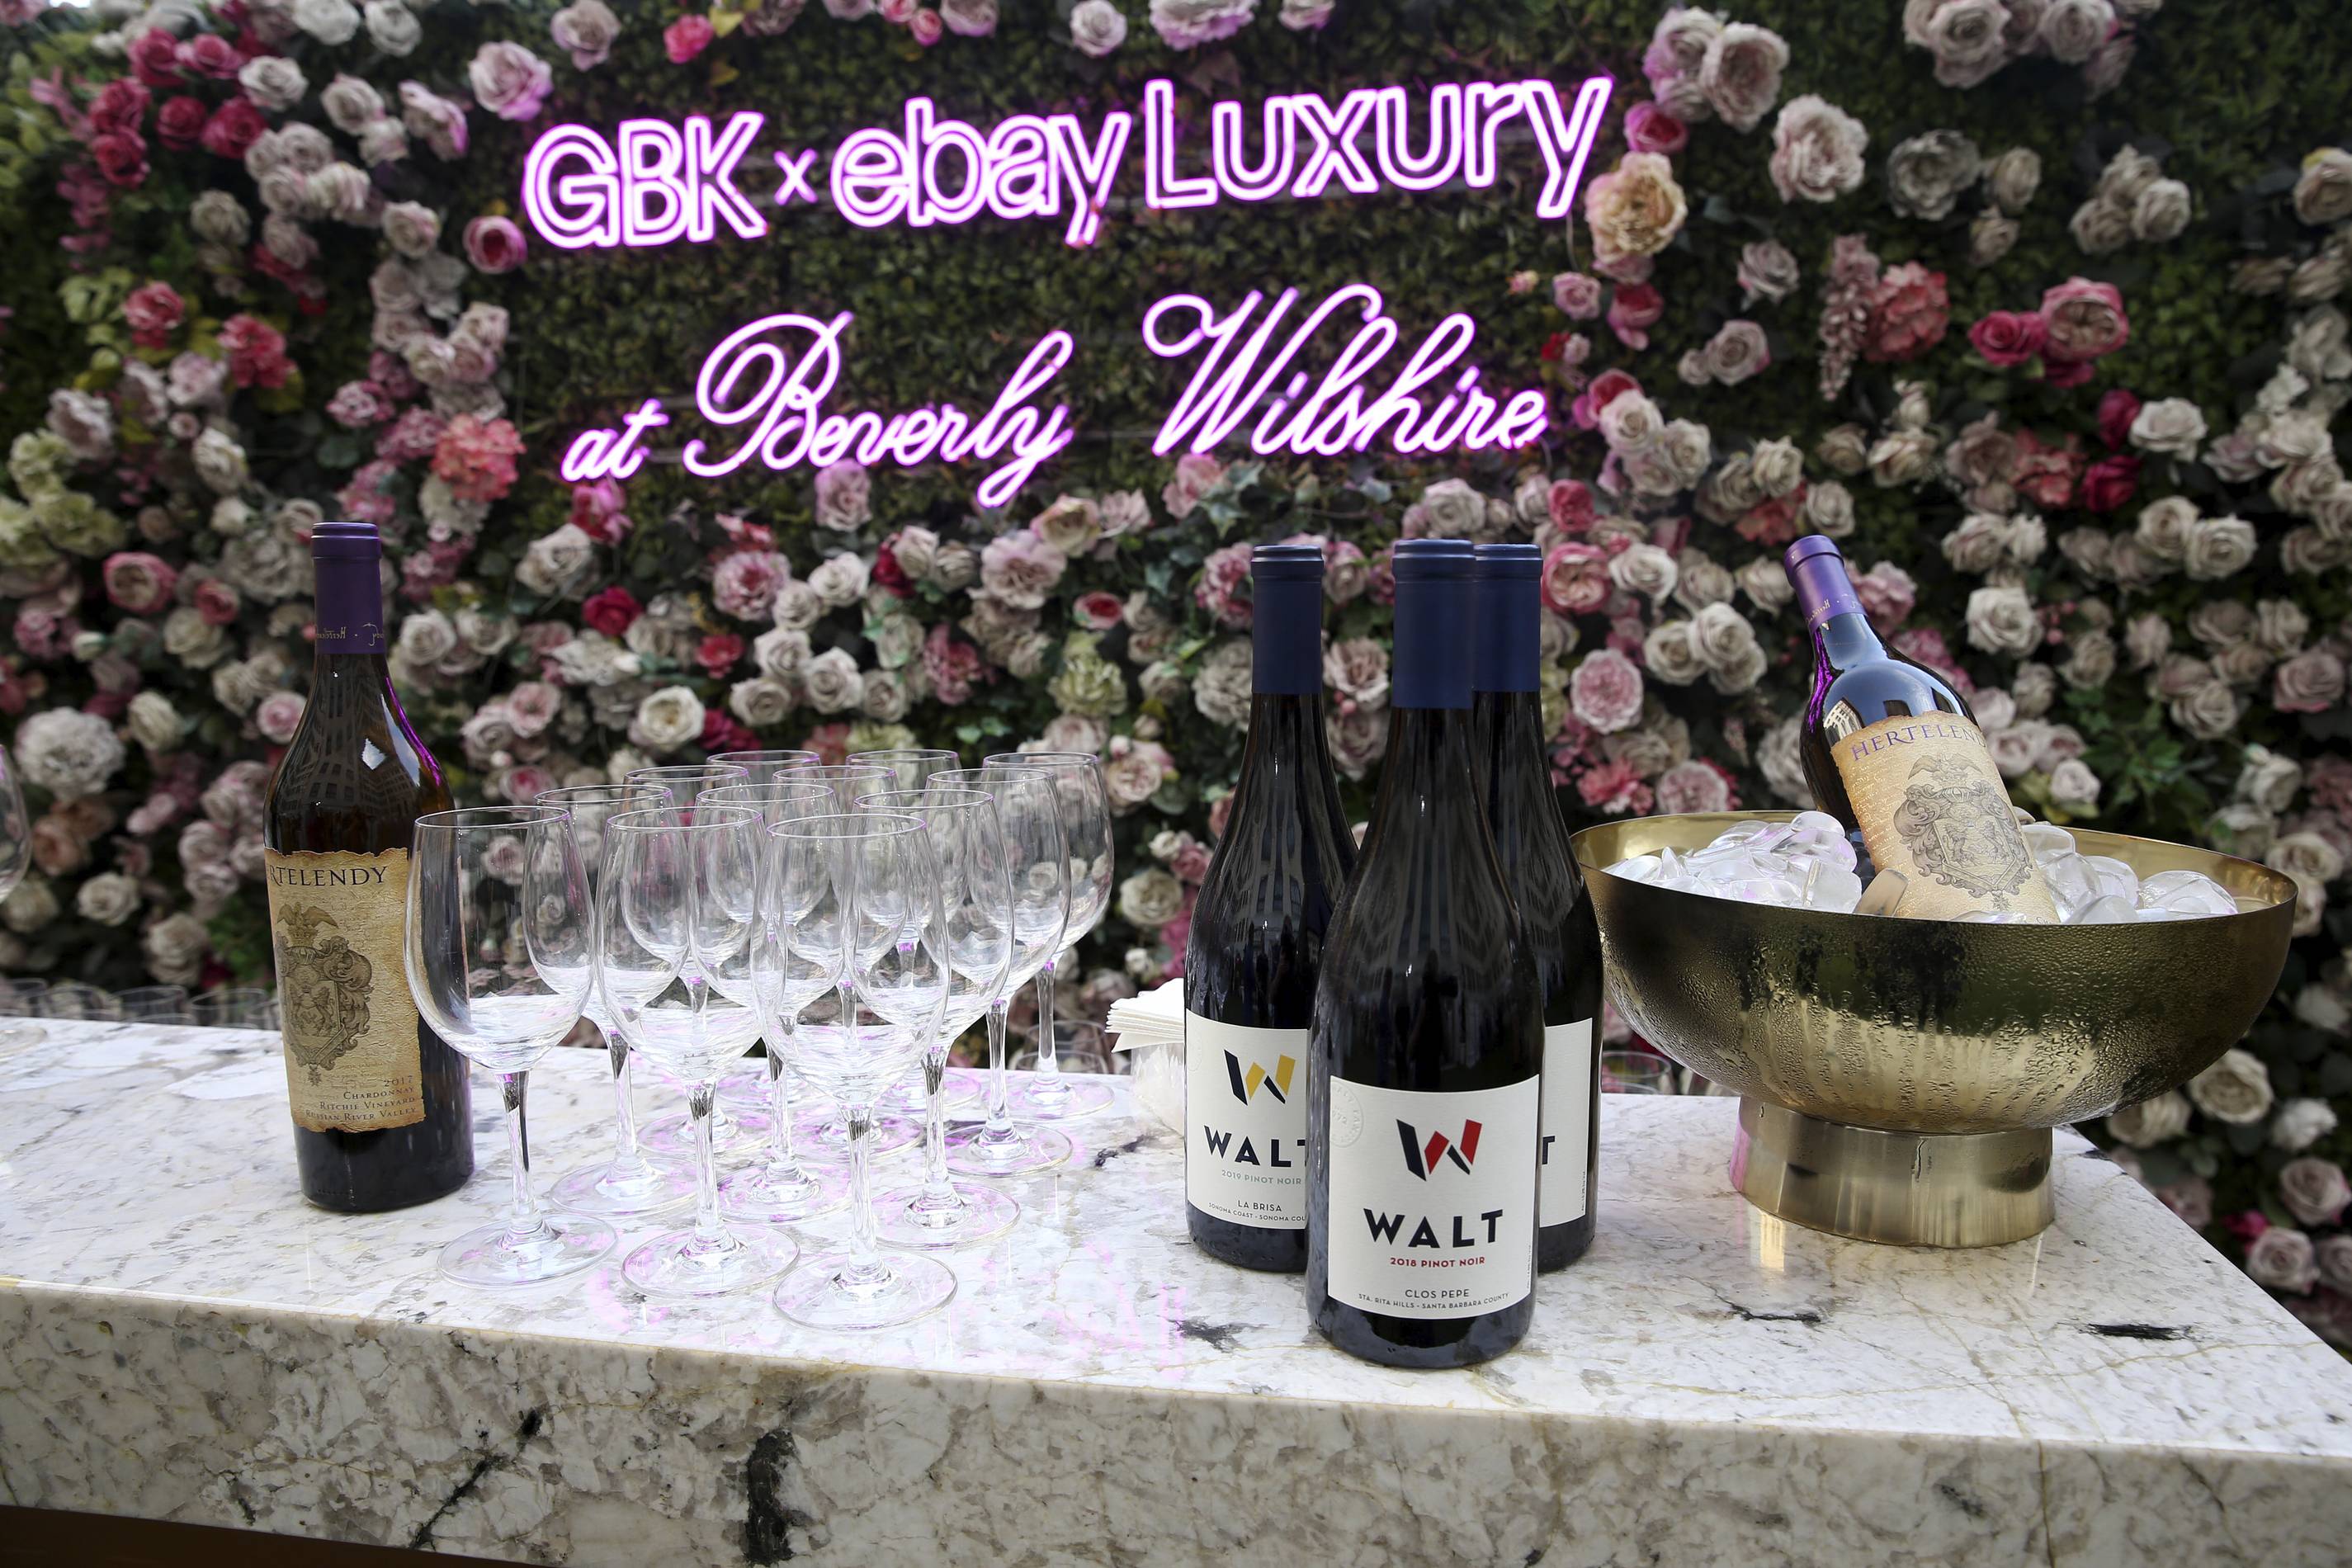 eBay & GBK Brand Bar Pre-Oscar Luxury Lounge